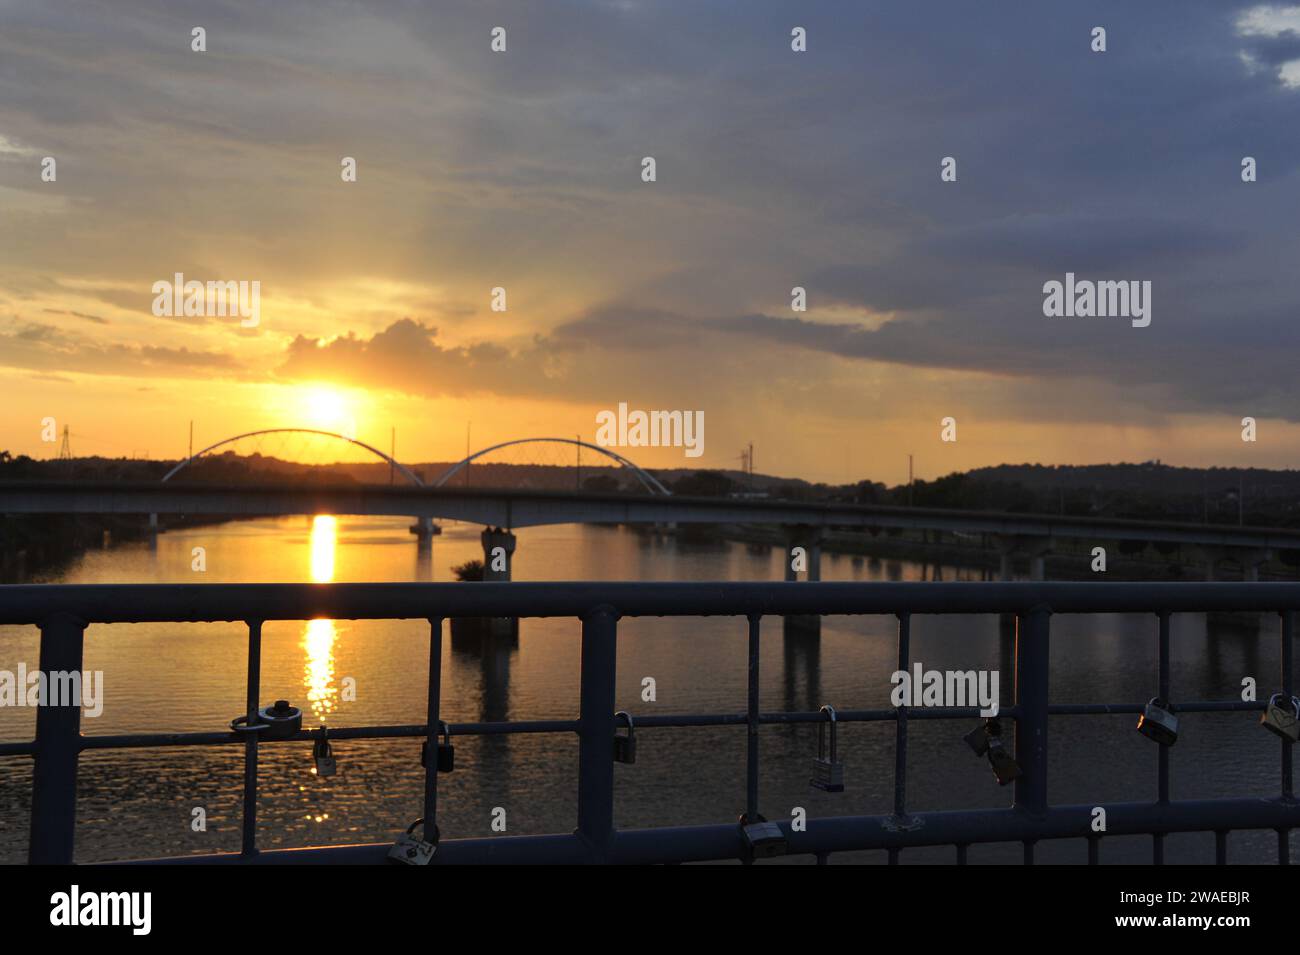 A beautiful golden sunset over a tranquil bridge with padlocks Stock Photo